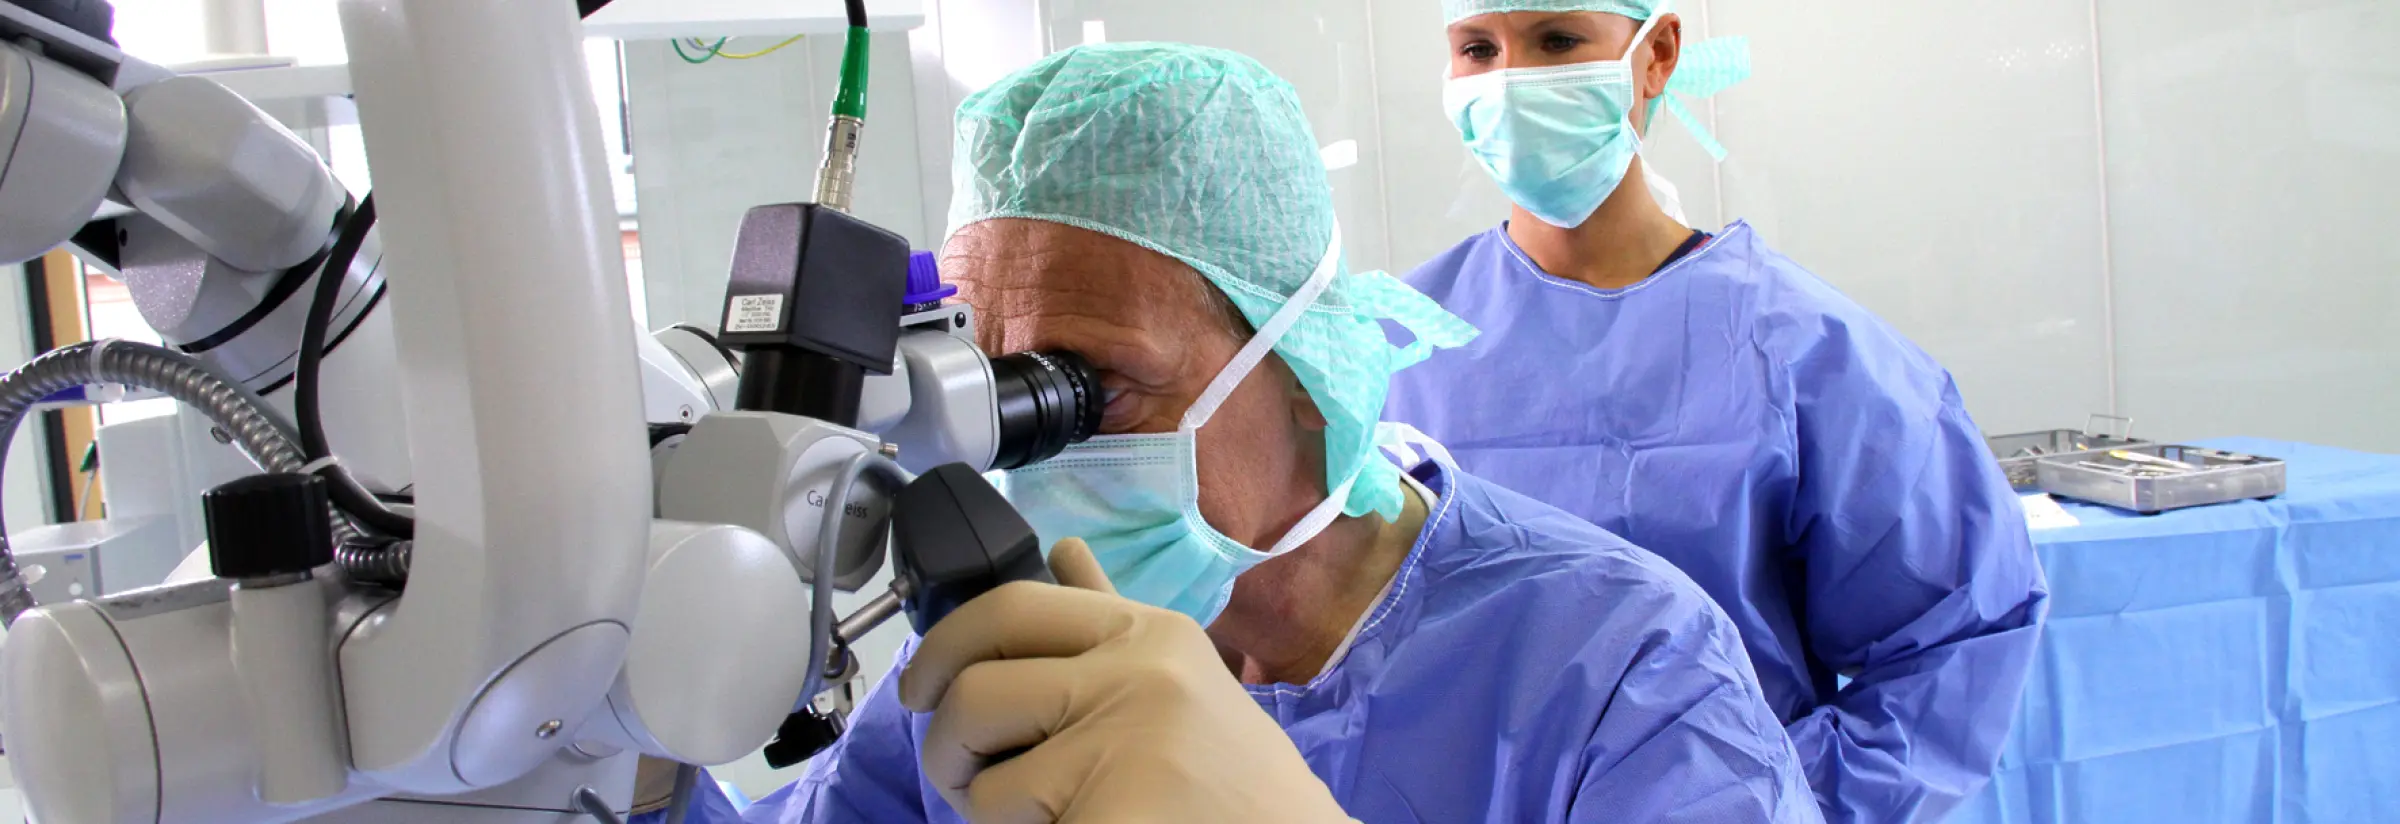 Rekonstruktive Mikrochirurgie am ETHIANUM – meisterhafte Feinarbeit